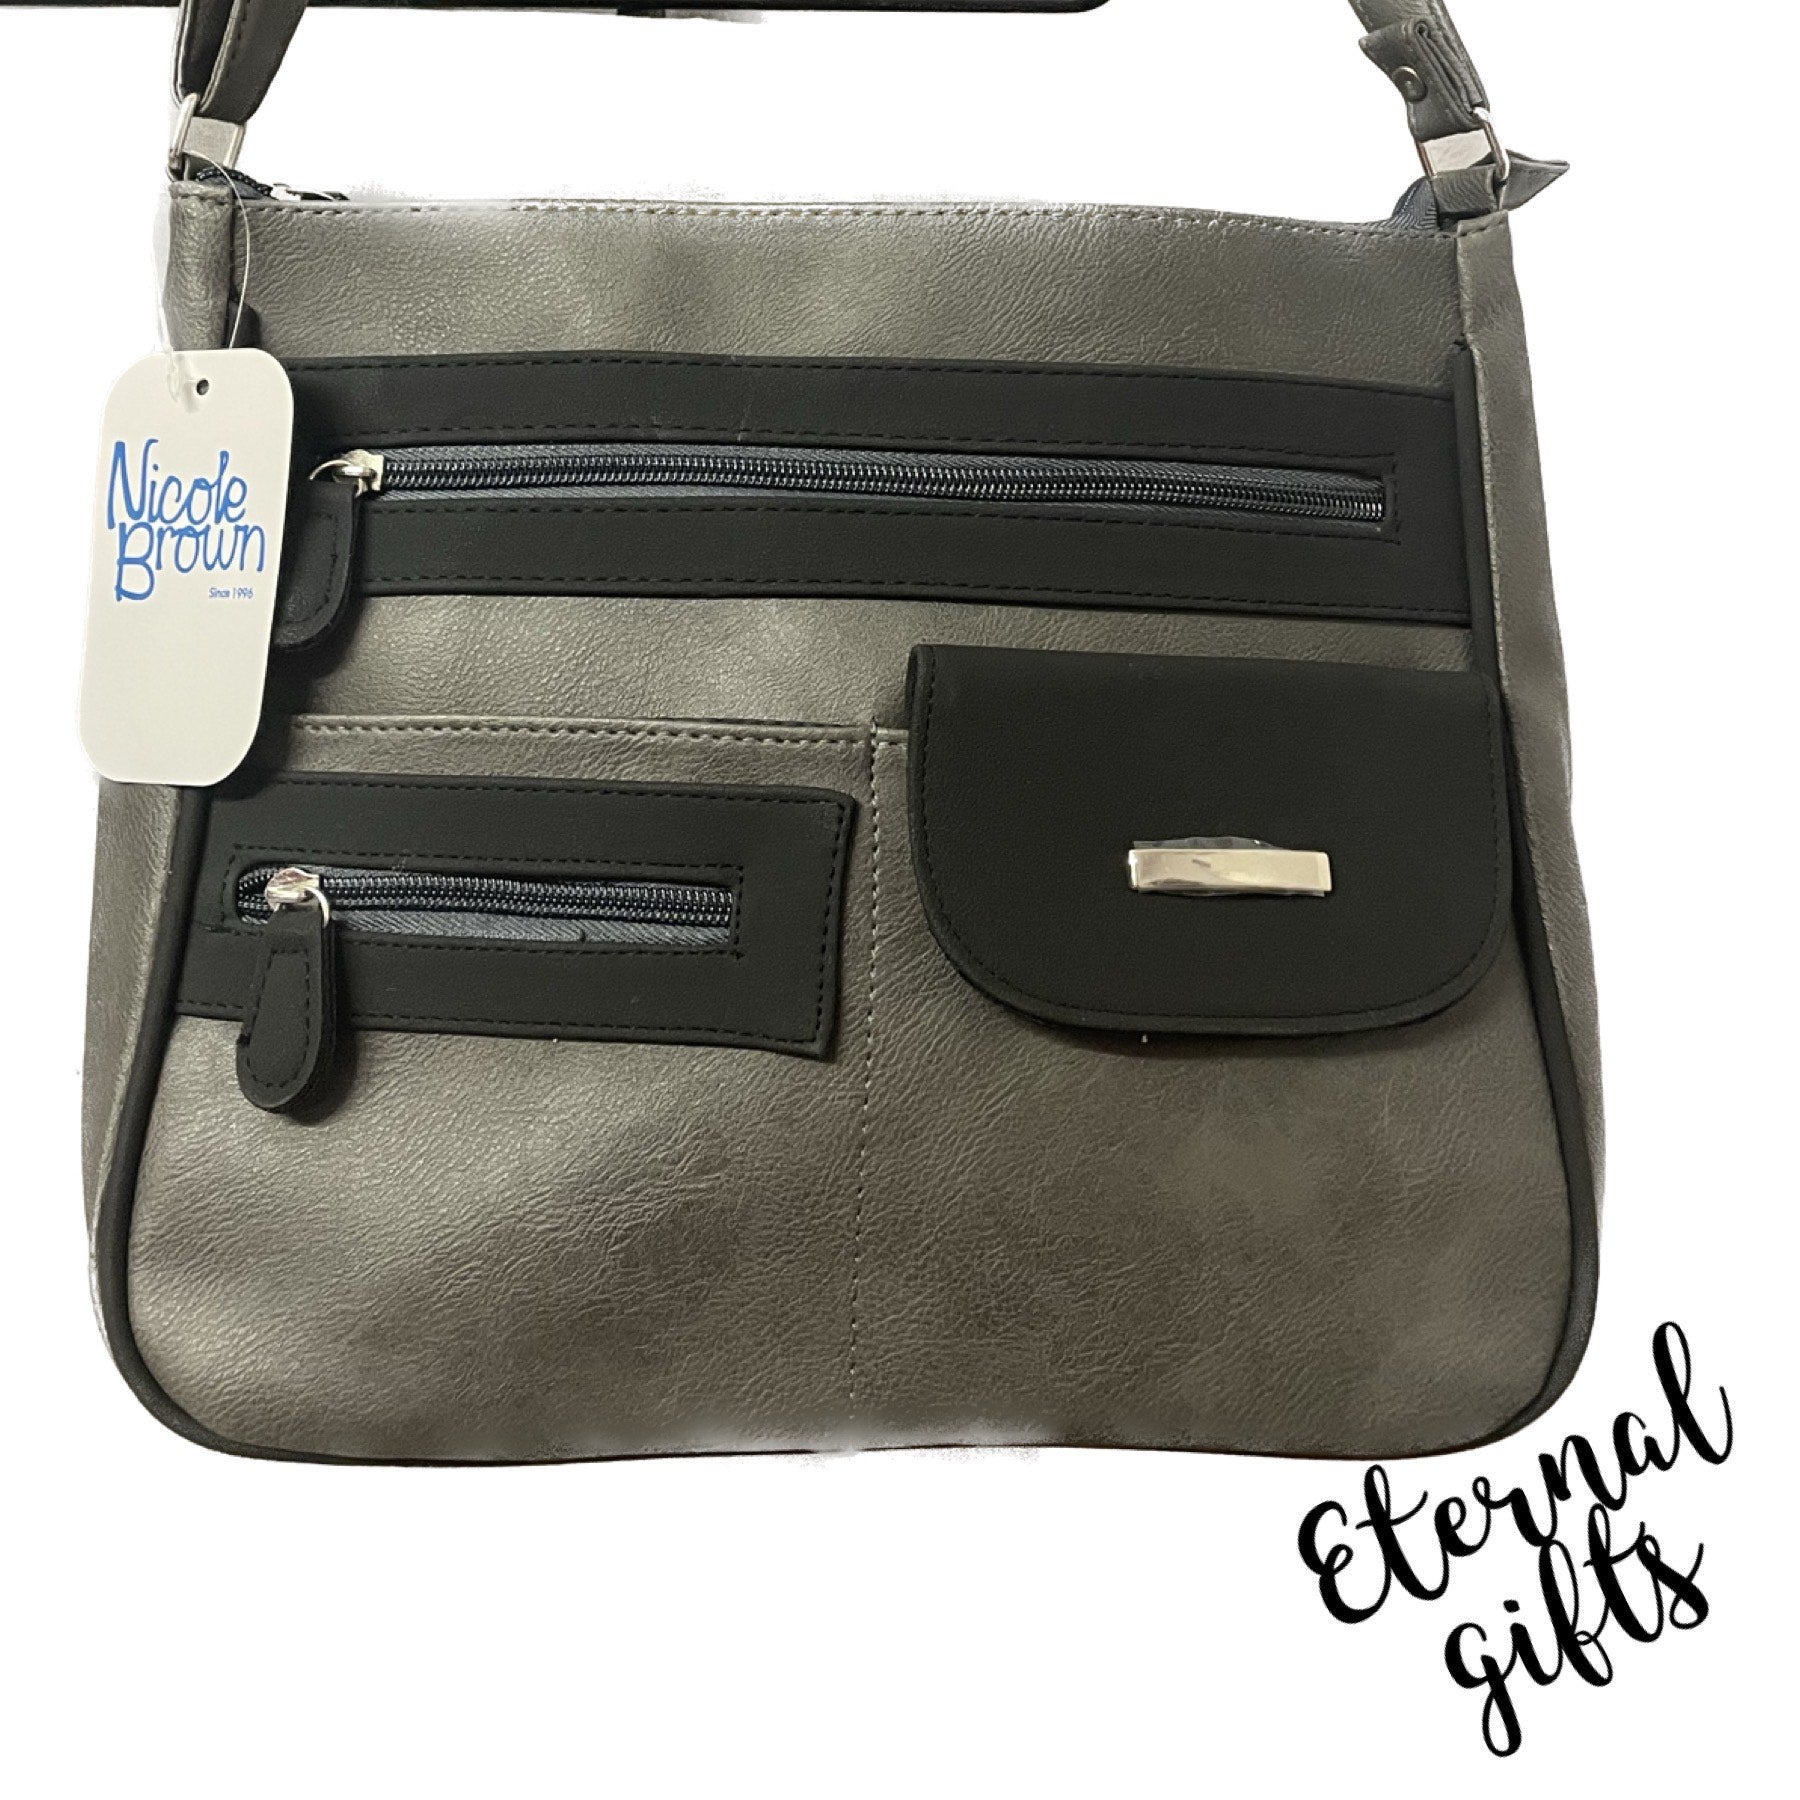 Utility Crossover Bag in Grey/Black Colourway -Nicole Brown